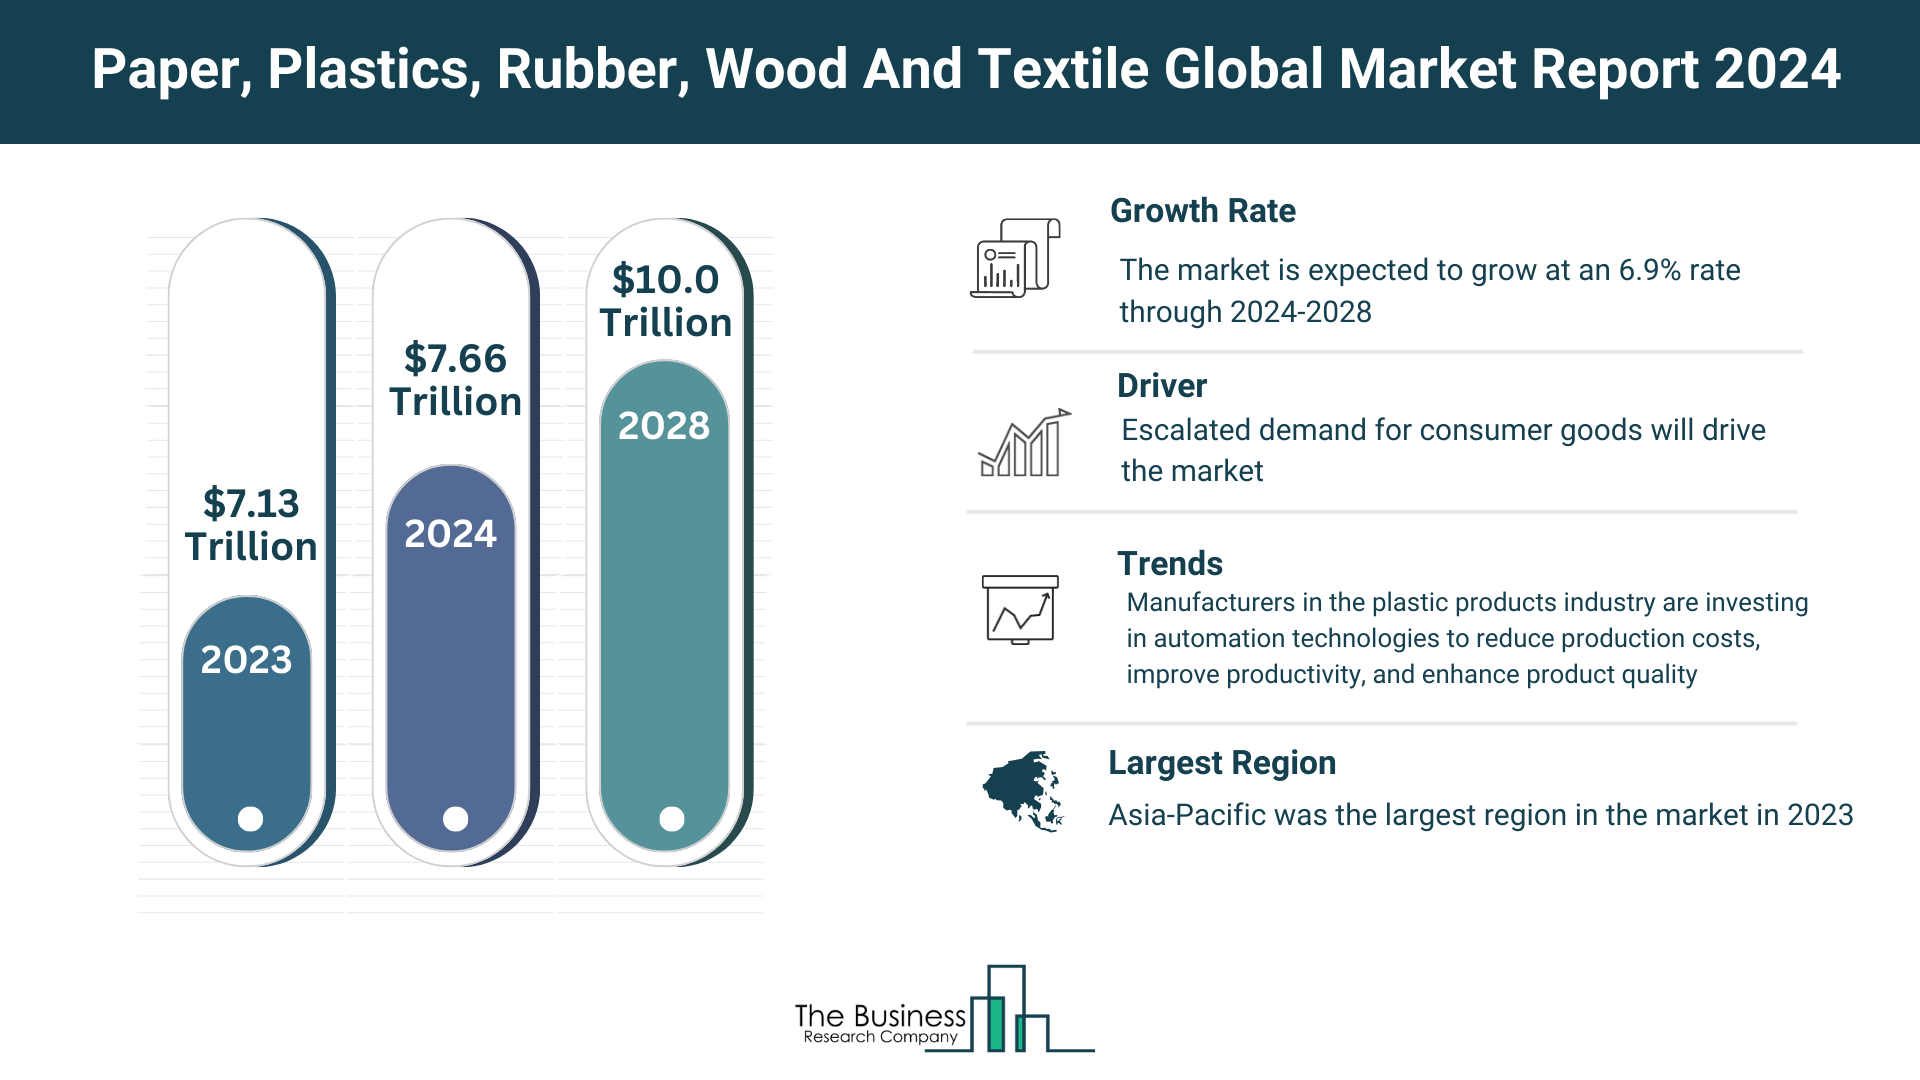 Global Paper, Plastics, Rubber, Wood And Textile Market